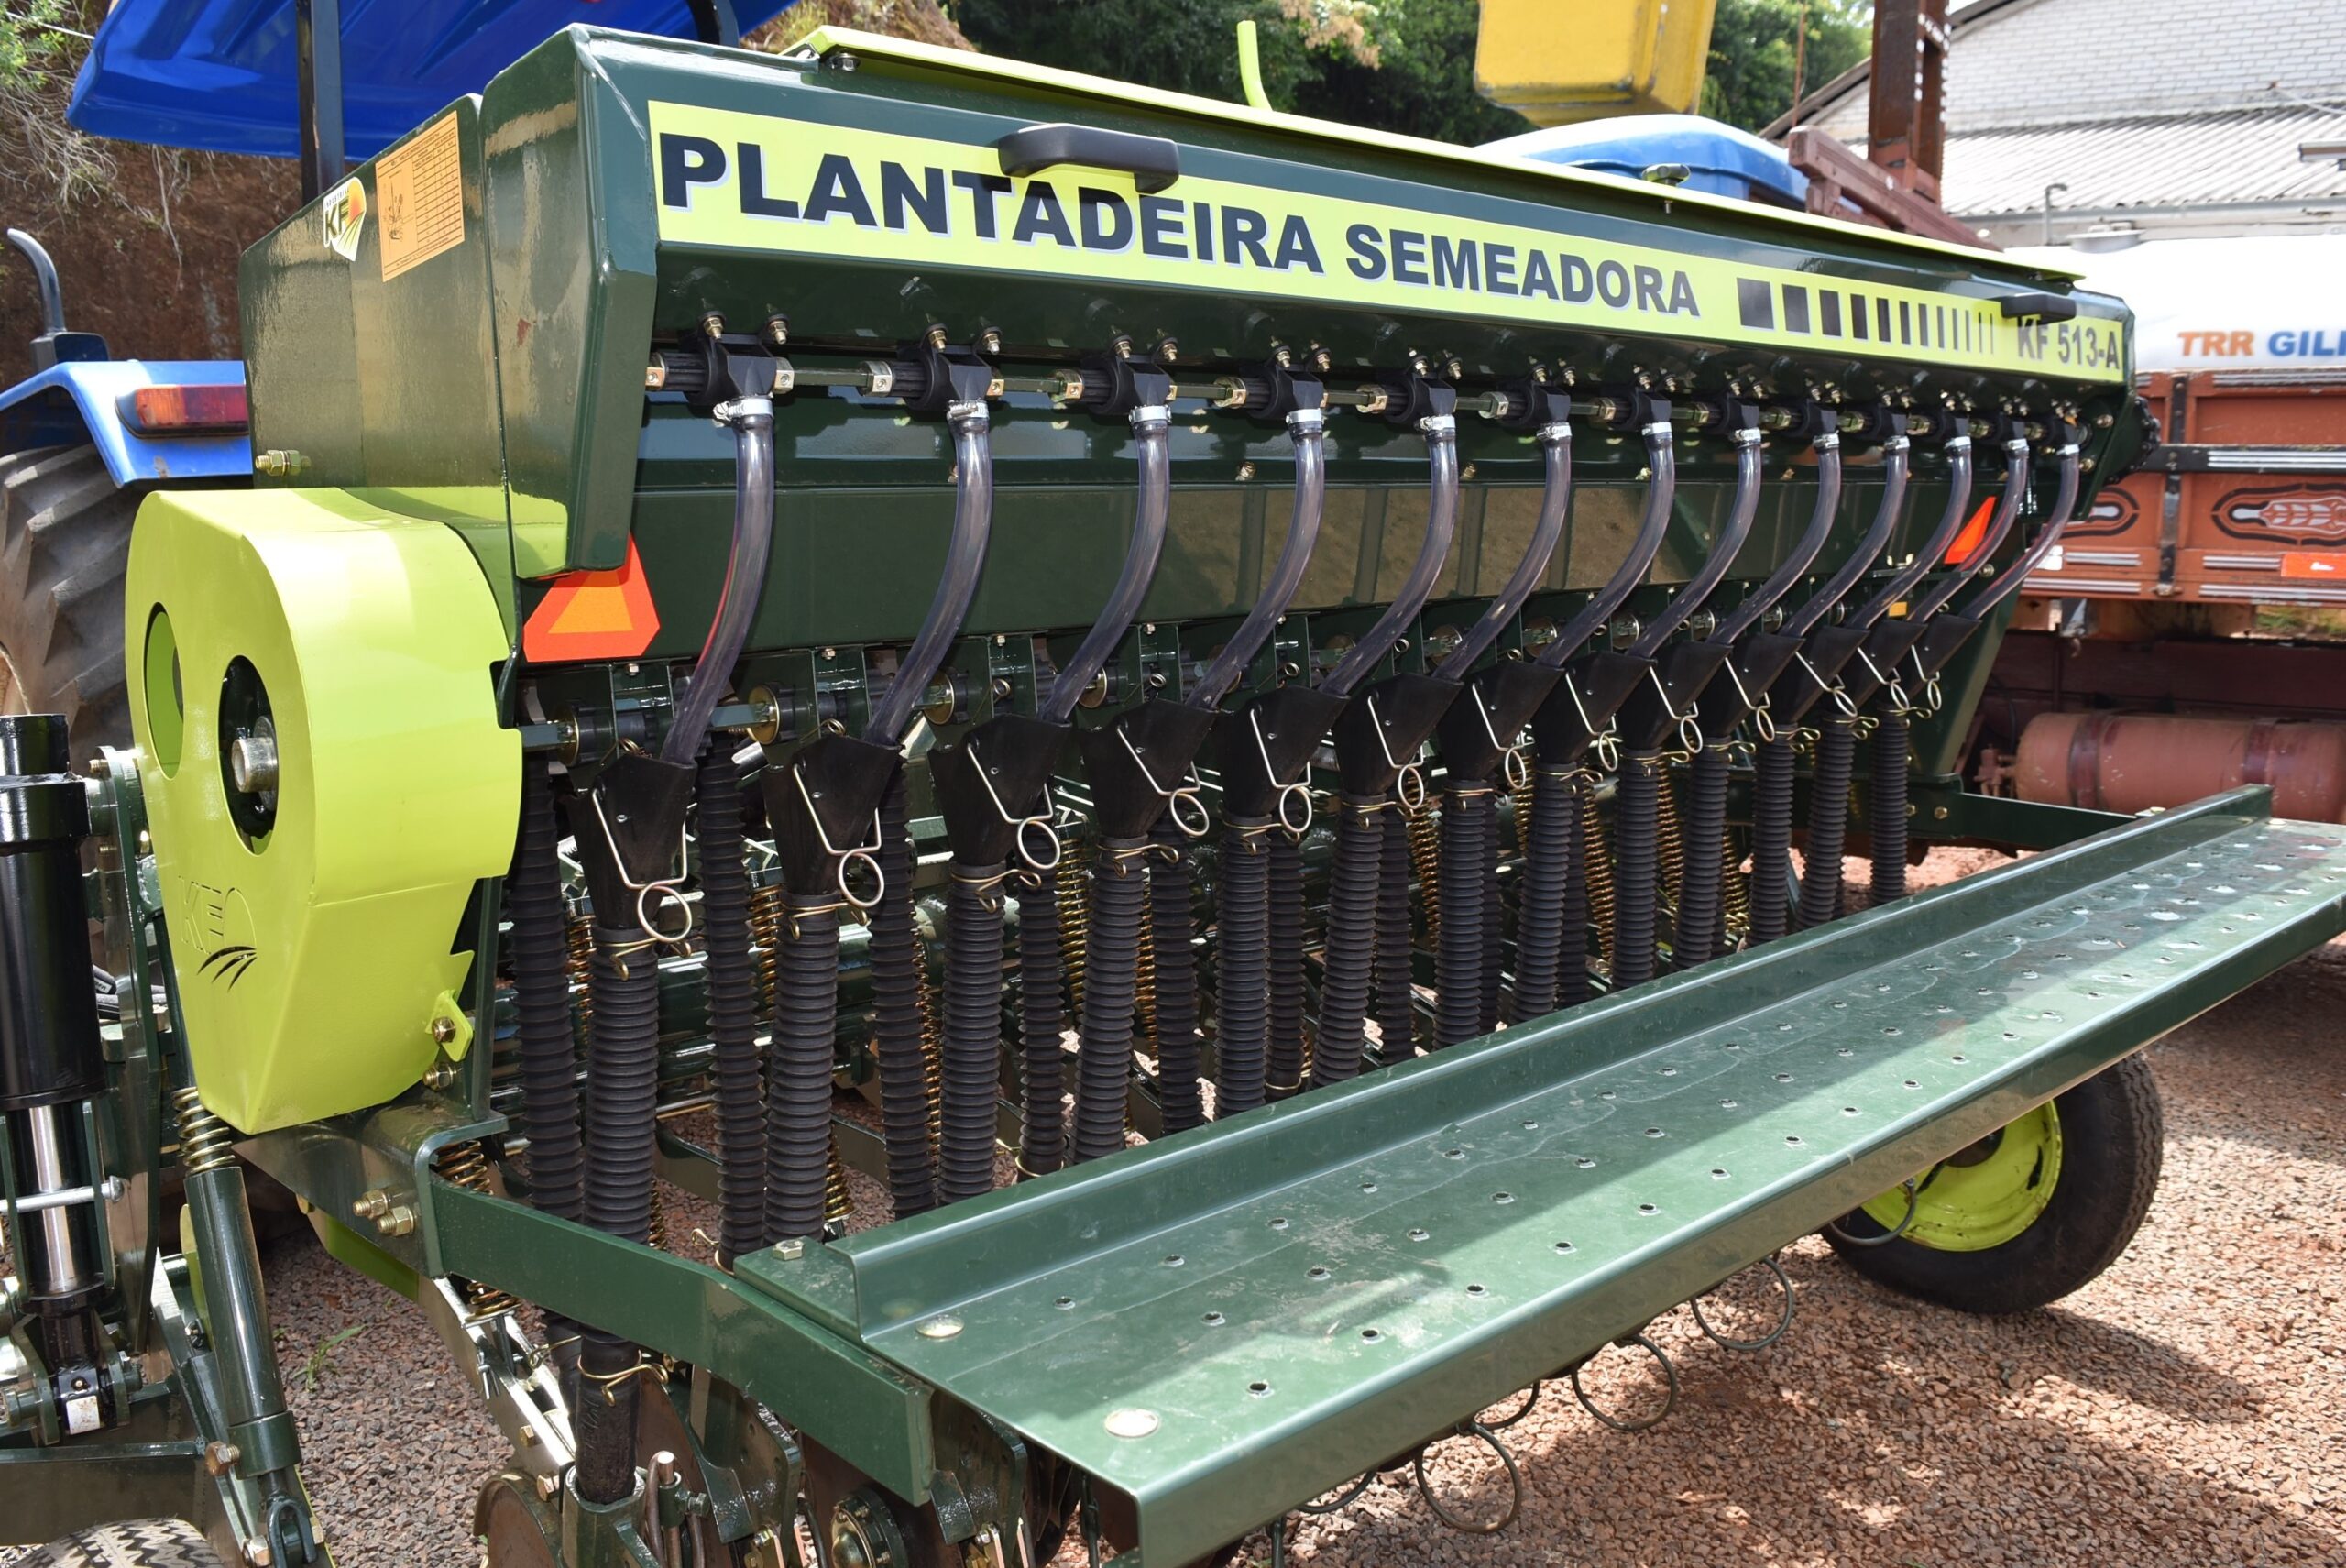 You are currently viewing Prefeitura de Xaxim adquire plantadeira semeadora de grãos miúdos